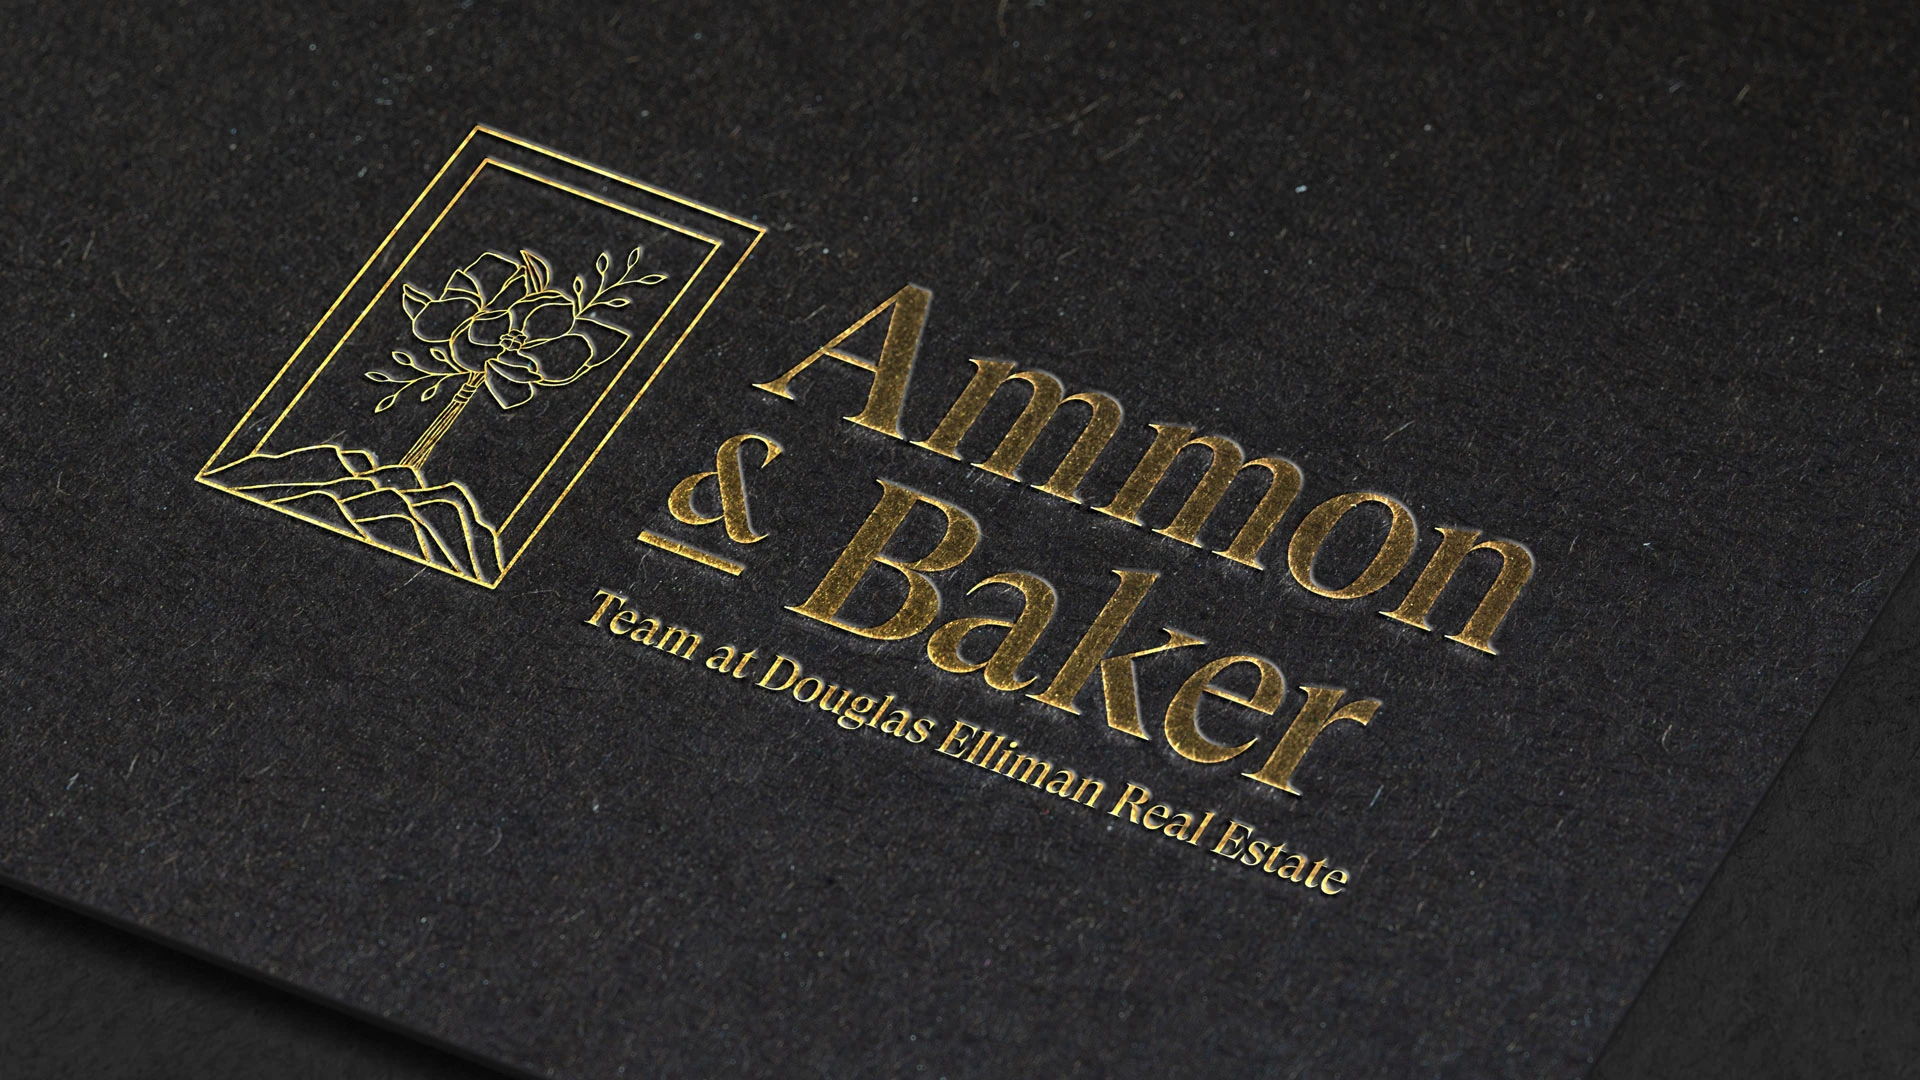 Mockup of Ammon Baker brand identity, Option 1-B in the left lockup as an embossed gold foil on dark paper.